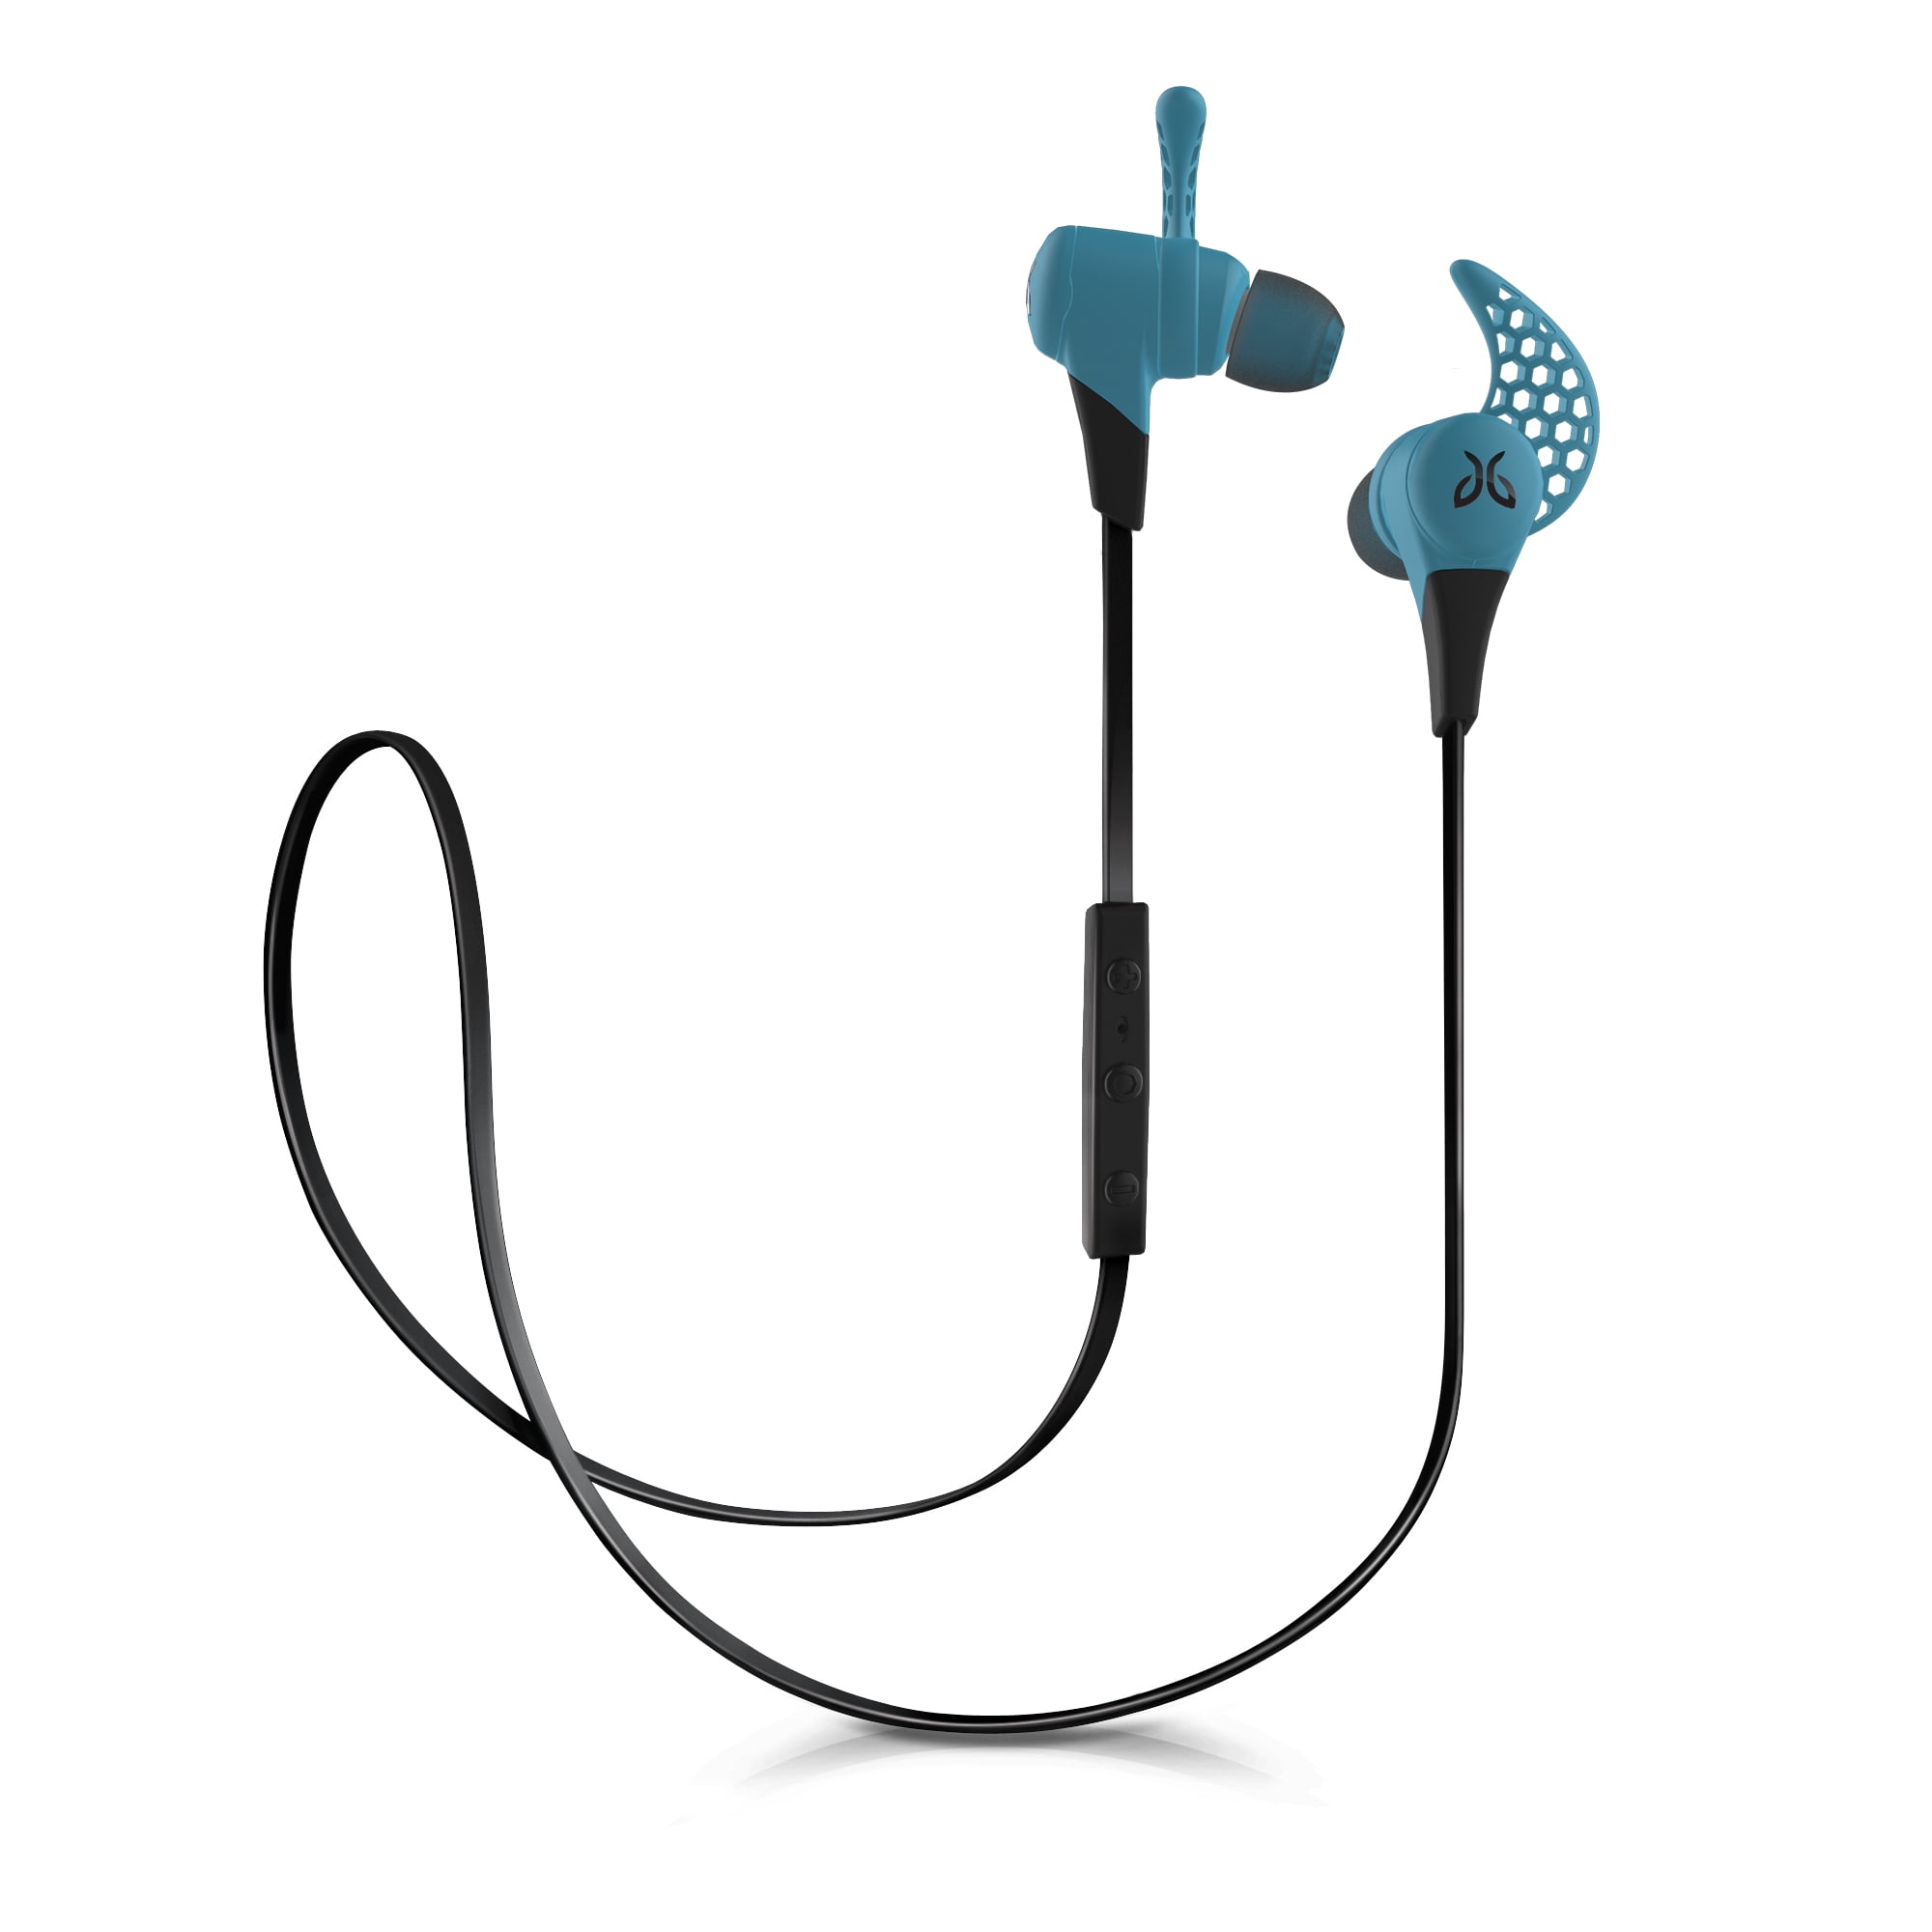 Jaybird Bluetooth Sports In-Ear Headphones, Midnight Black, X2